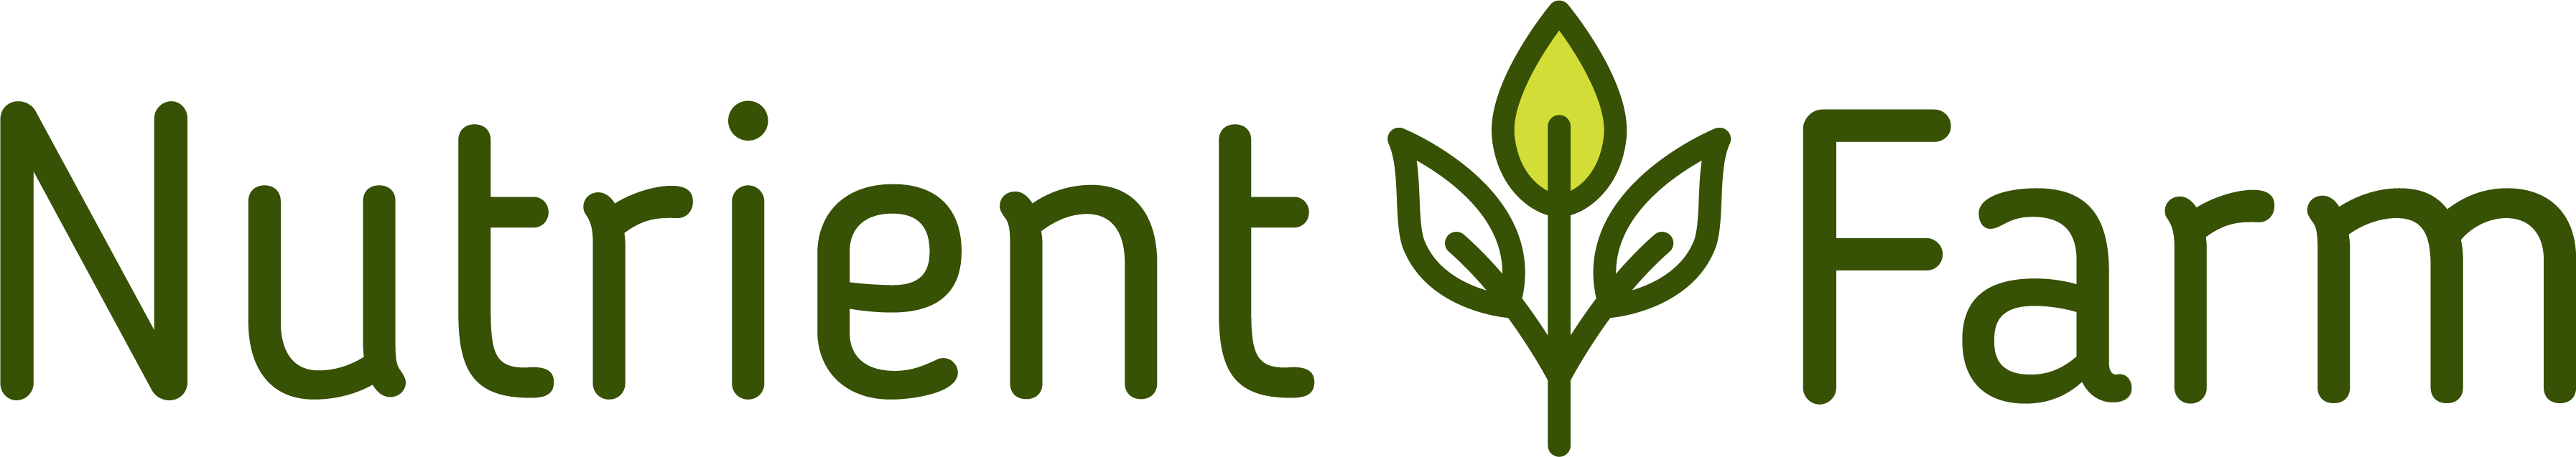 Nutrient farm logo on a white background.